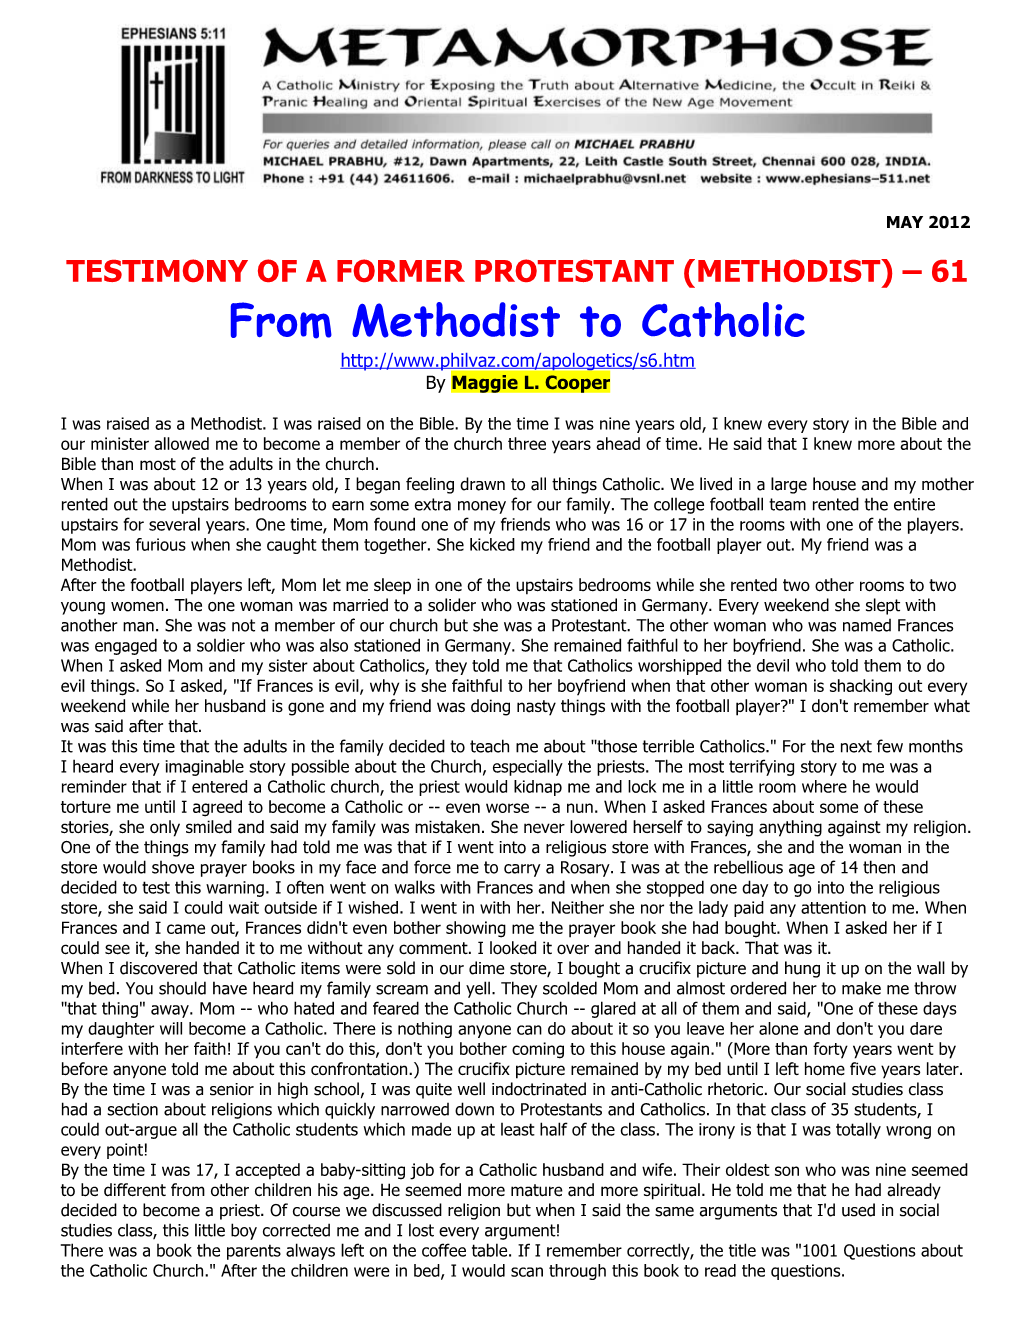 Testimony of a Former Protestant (Methodist) 61